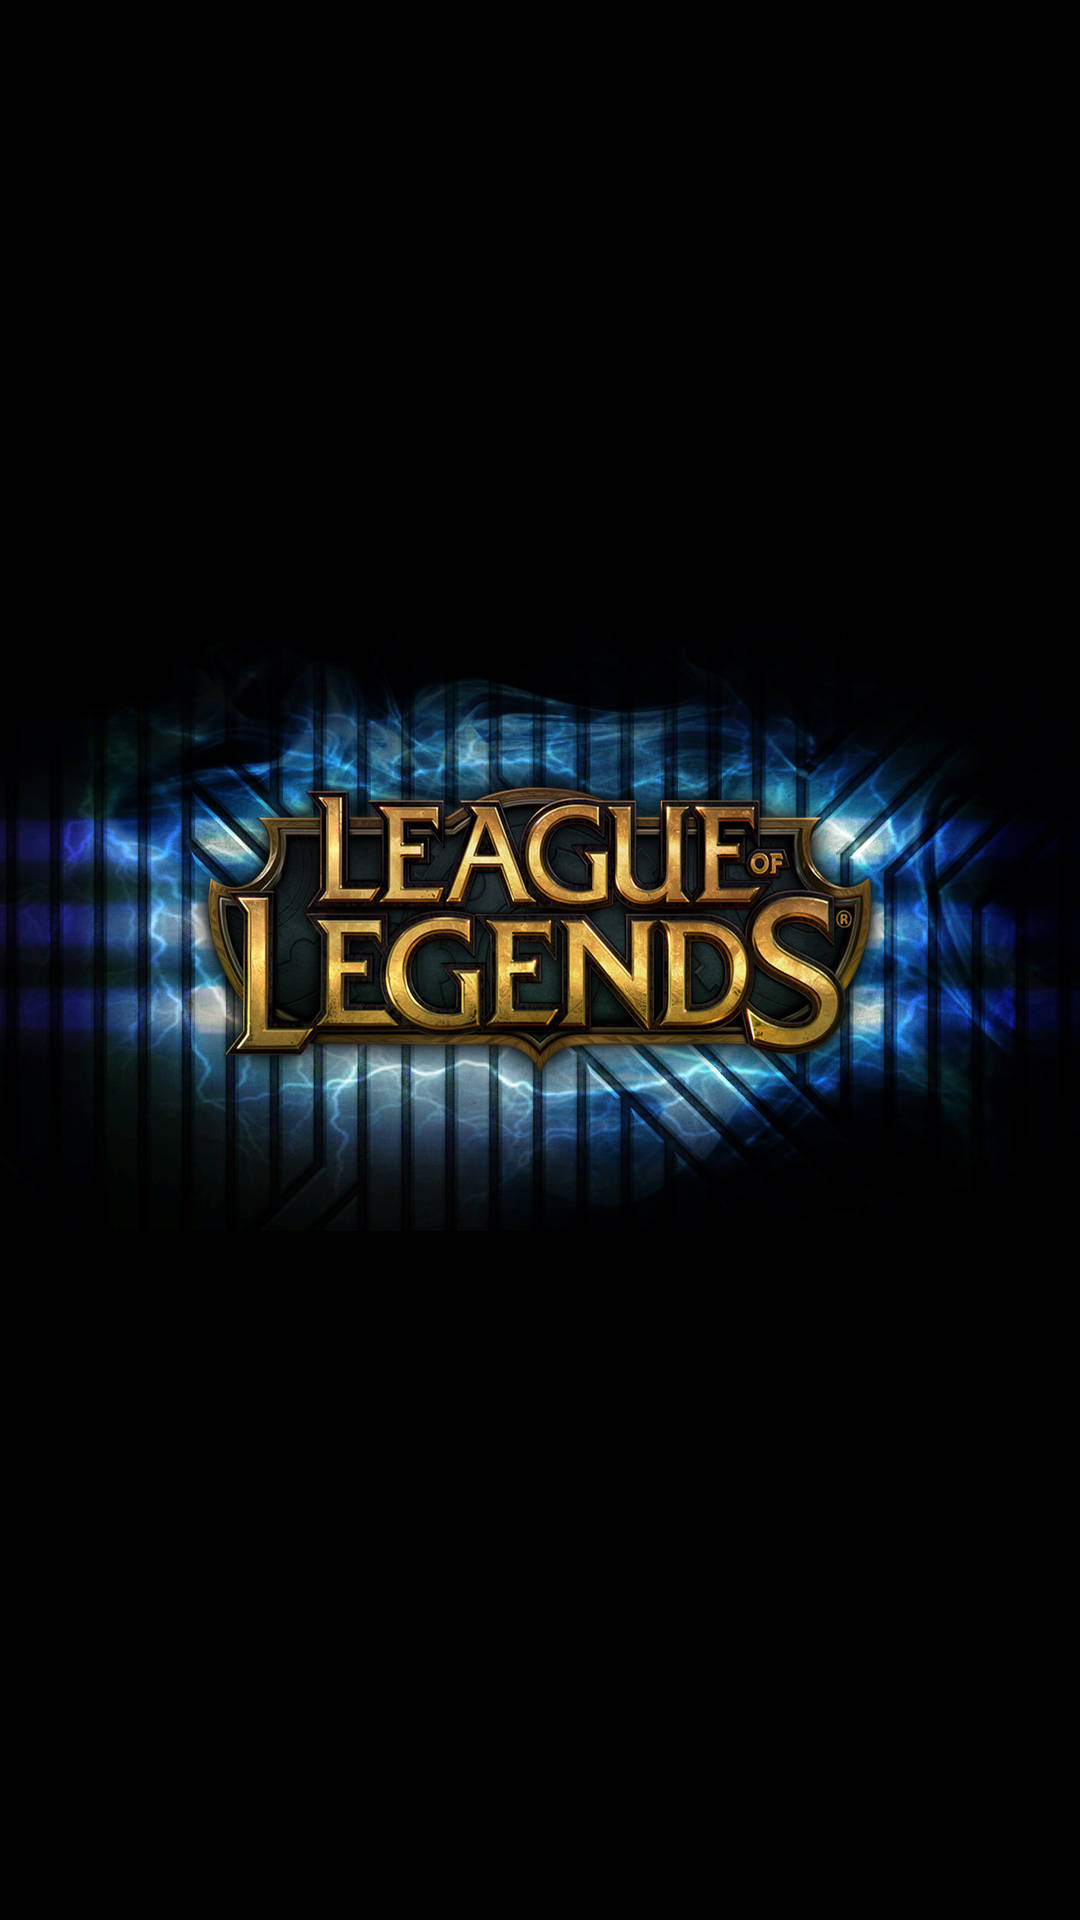 Leagueof Legends Iphone-logo Wallpaper